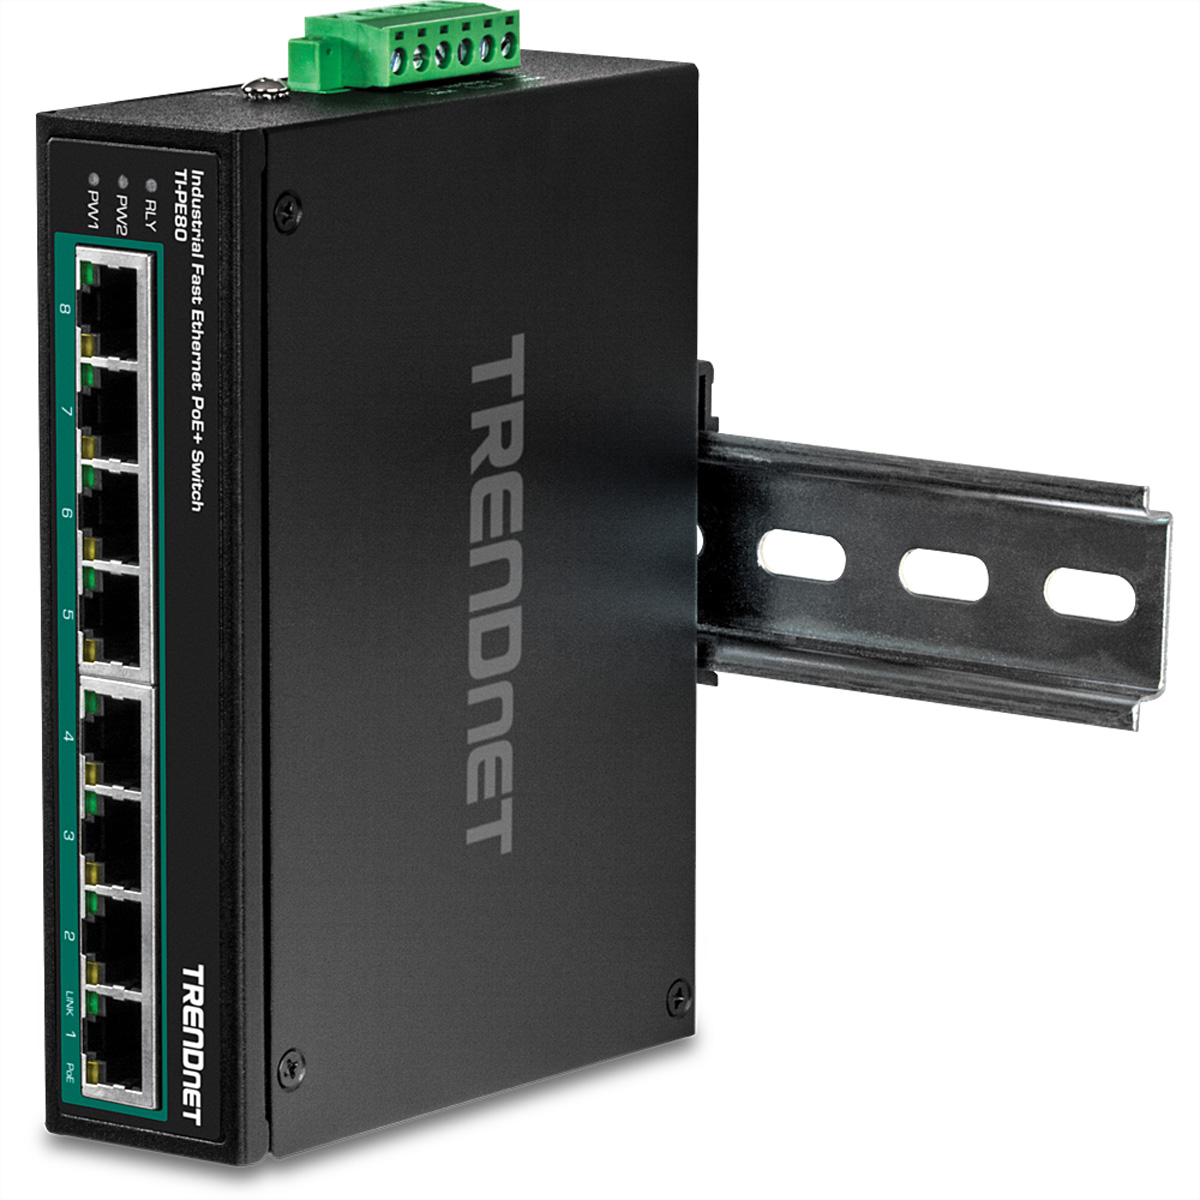 TRENDnet TI-PE80 Industrial Fast Ethernet PoE+ DIN-Rail Switch 8-Port